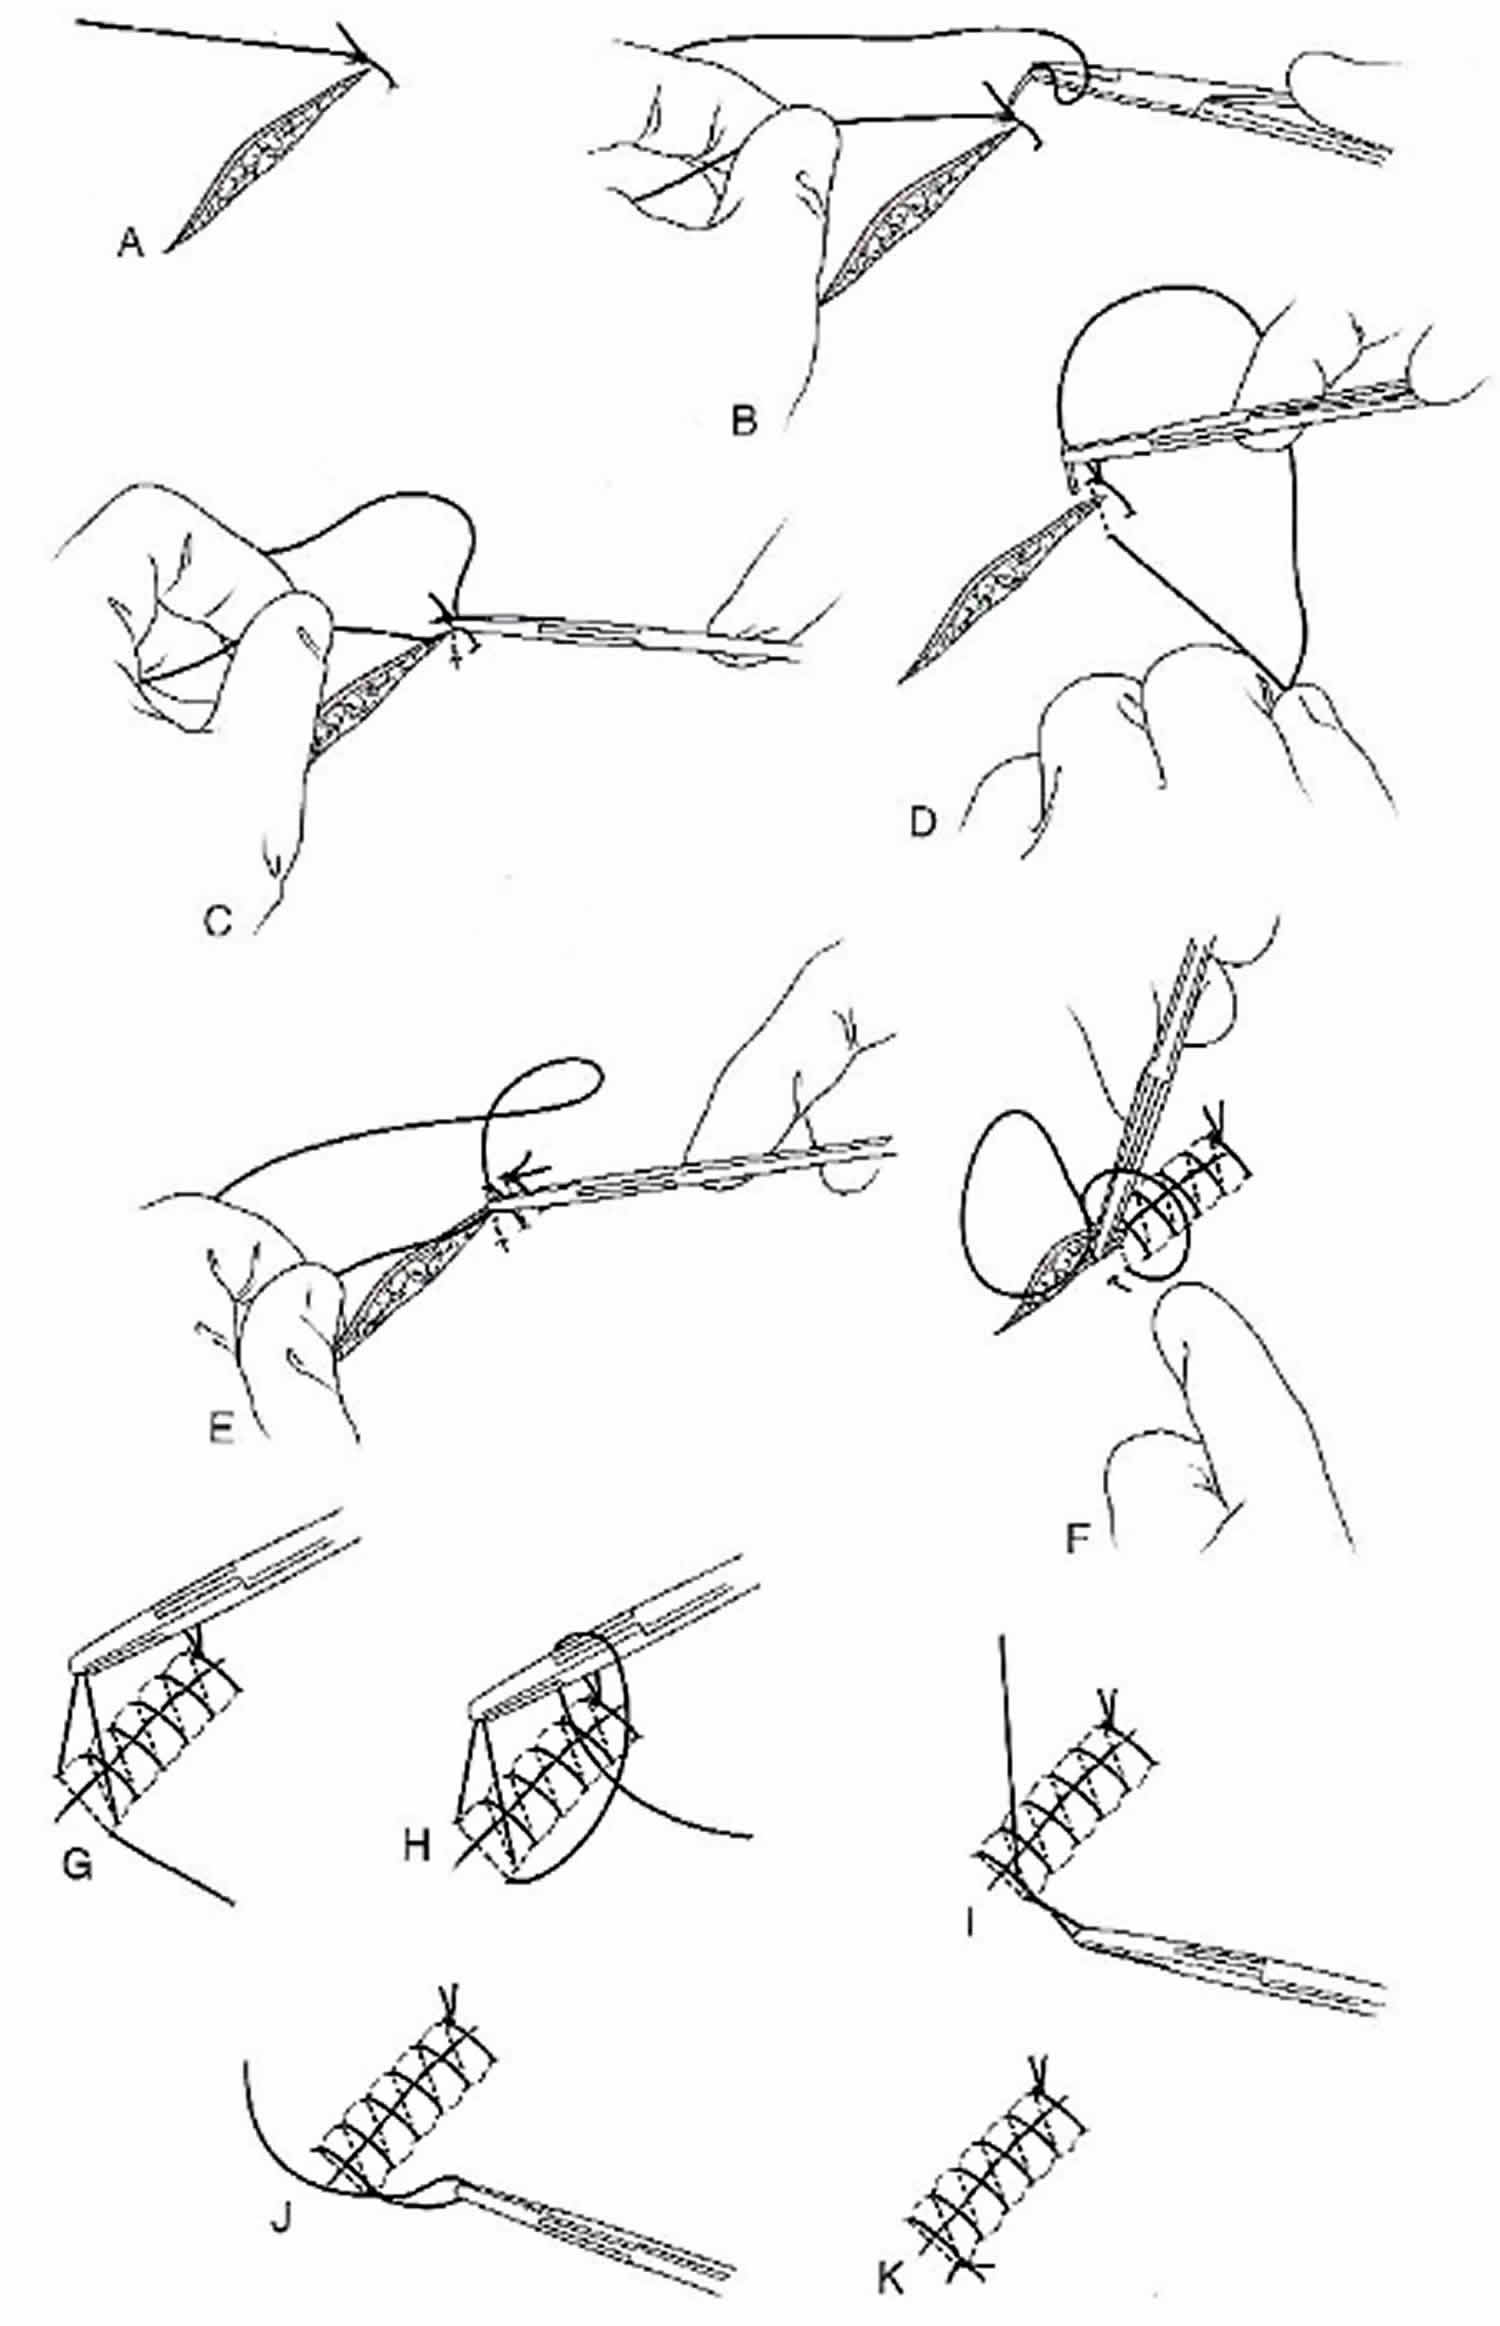 Simple running suture